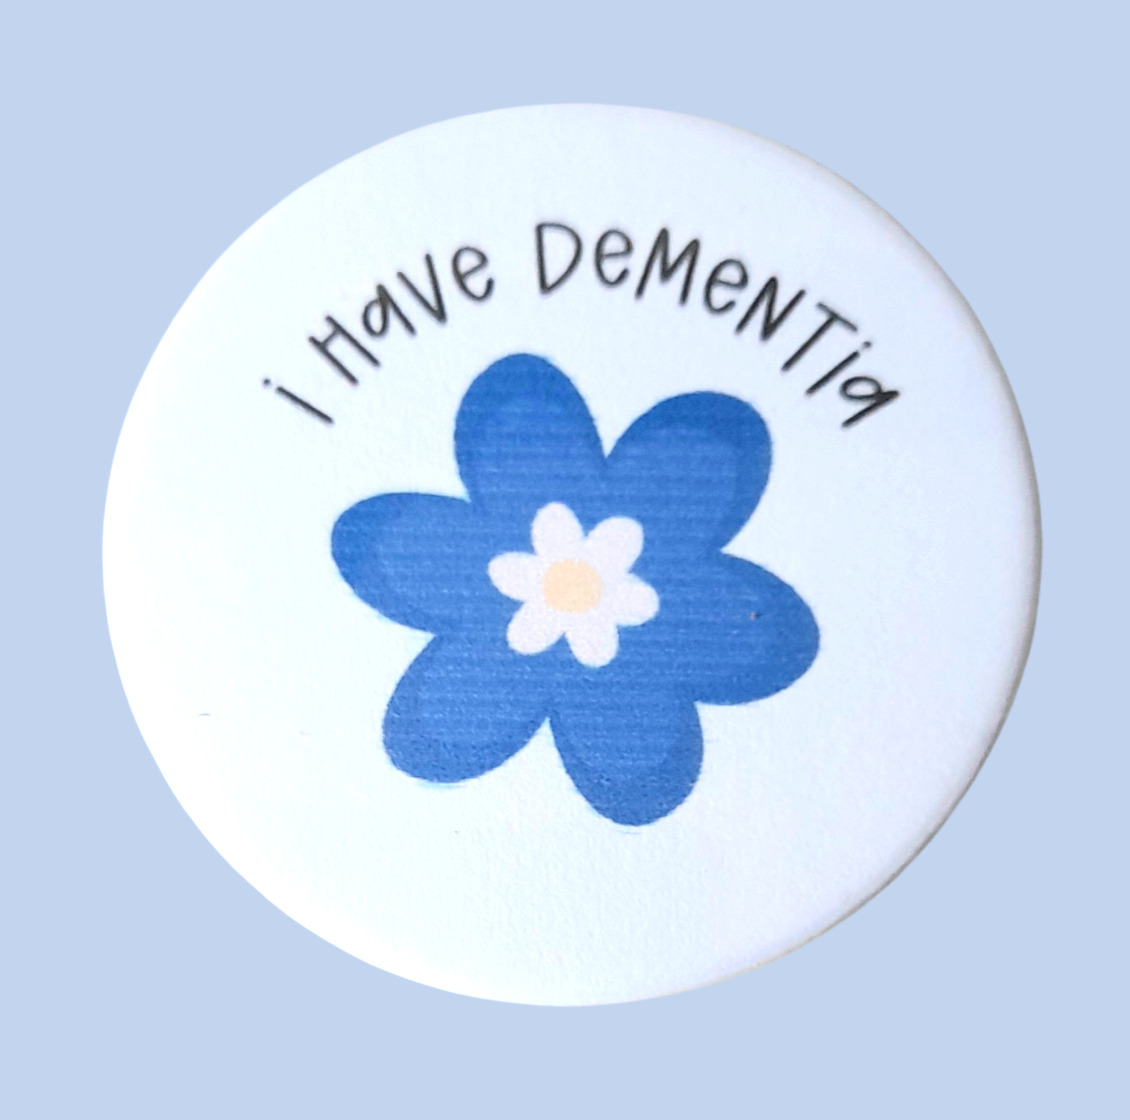 Hidden Disability Badge Dementia Awareness with Cute Forget-Me-Not Flower Design